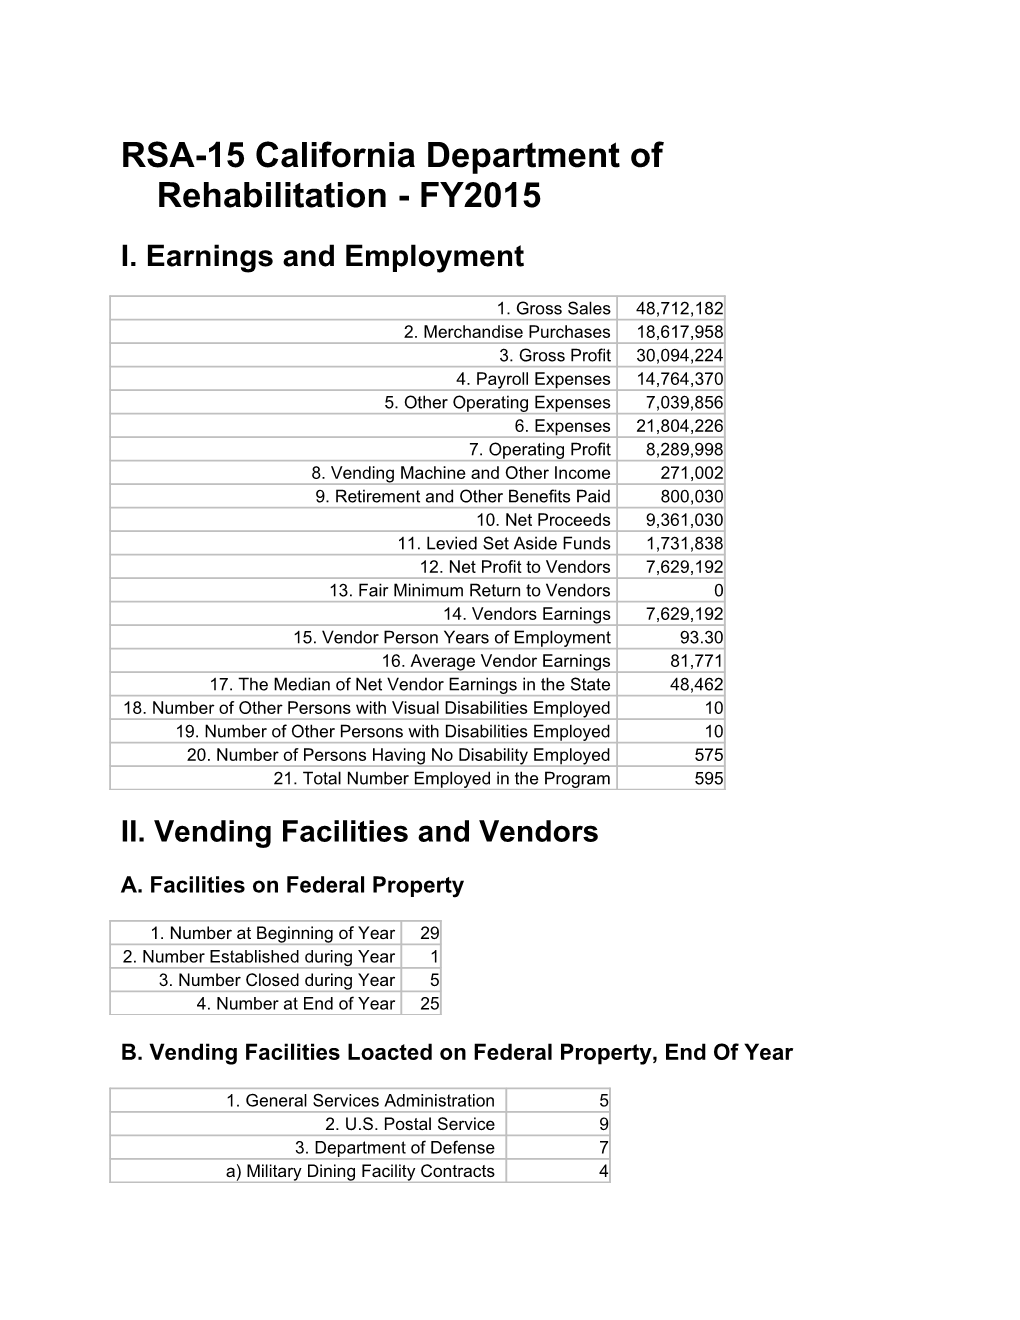 RSA-15 California Department of Rehabilitation - FY2015